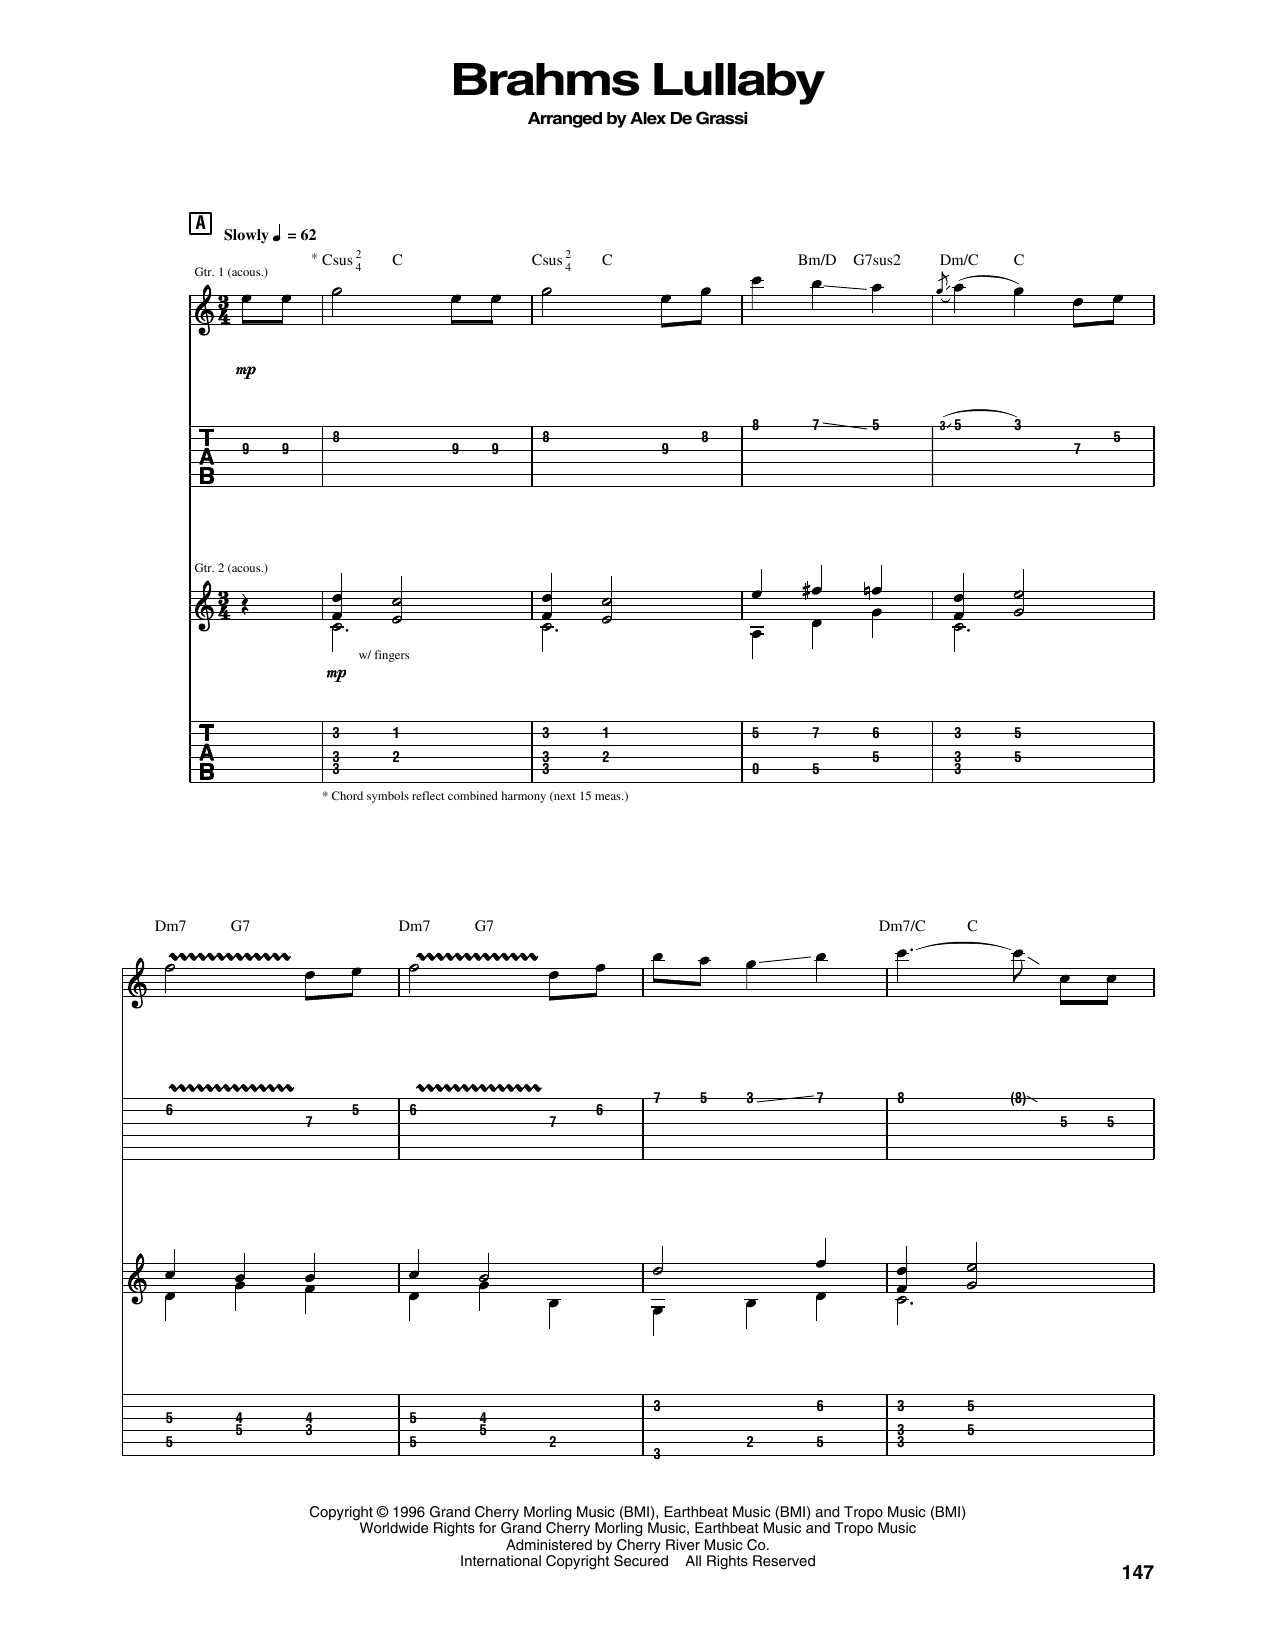 Galaxy uøkonomisk klasse Alex de Grassi "Brahms Lullaby" Sheet Music PDF Notes, Chords | Download,  Free Preview 1353493